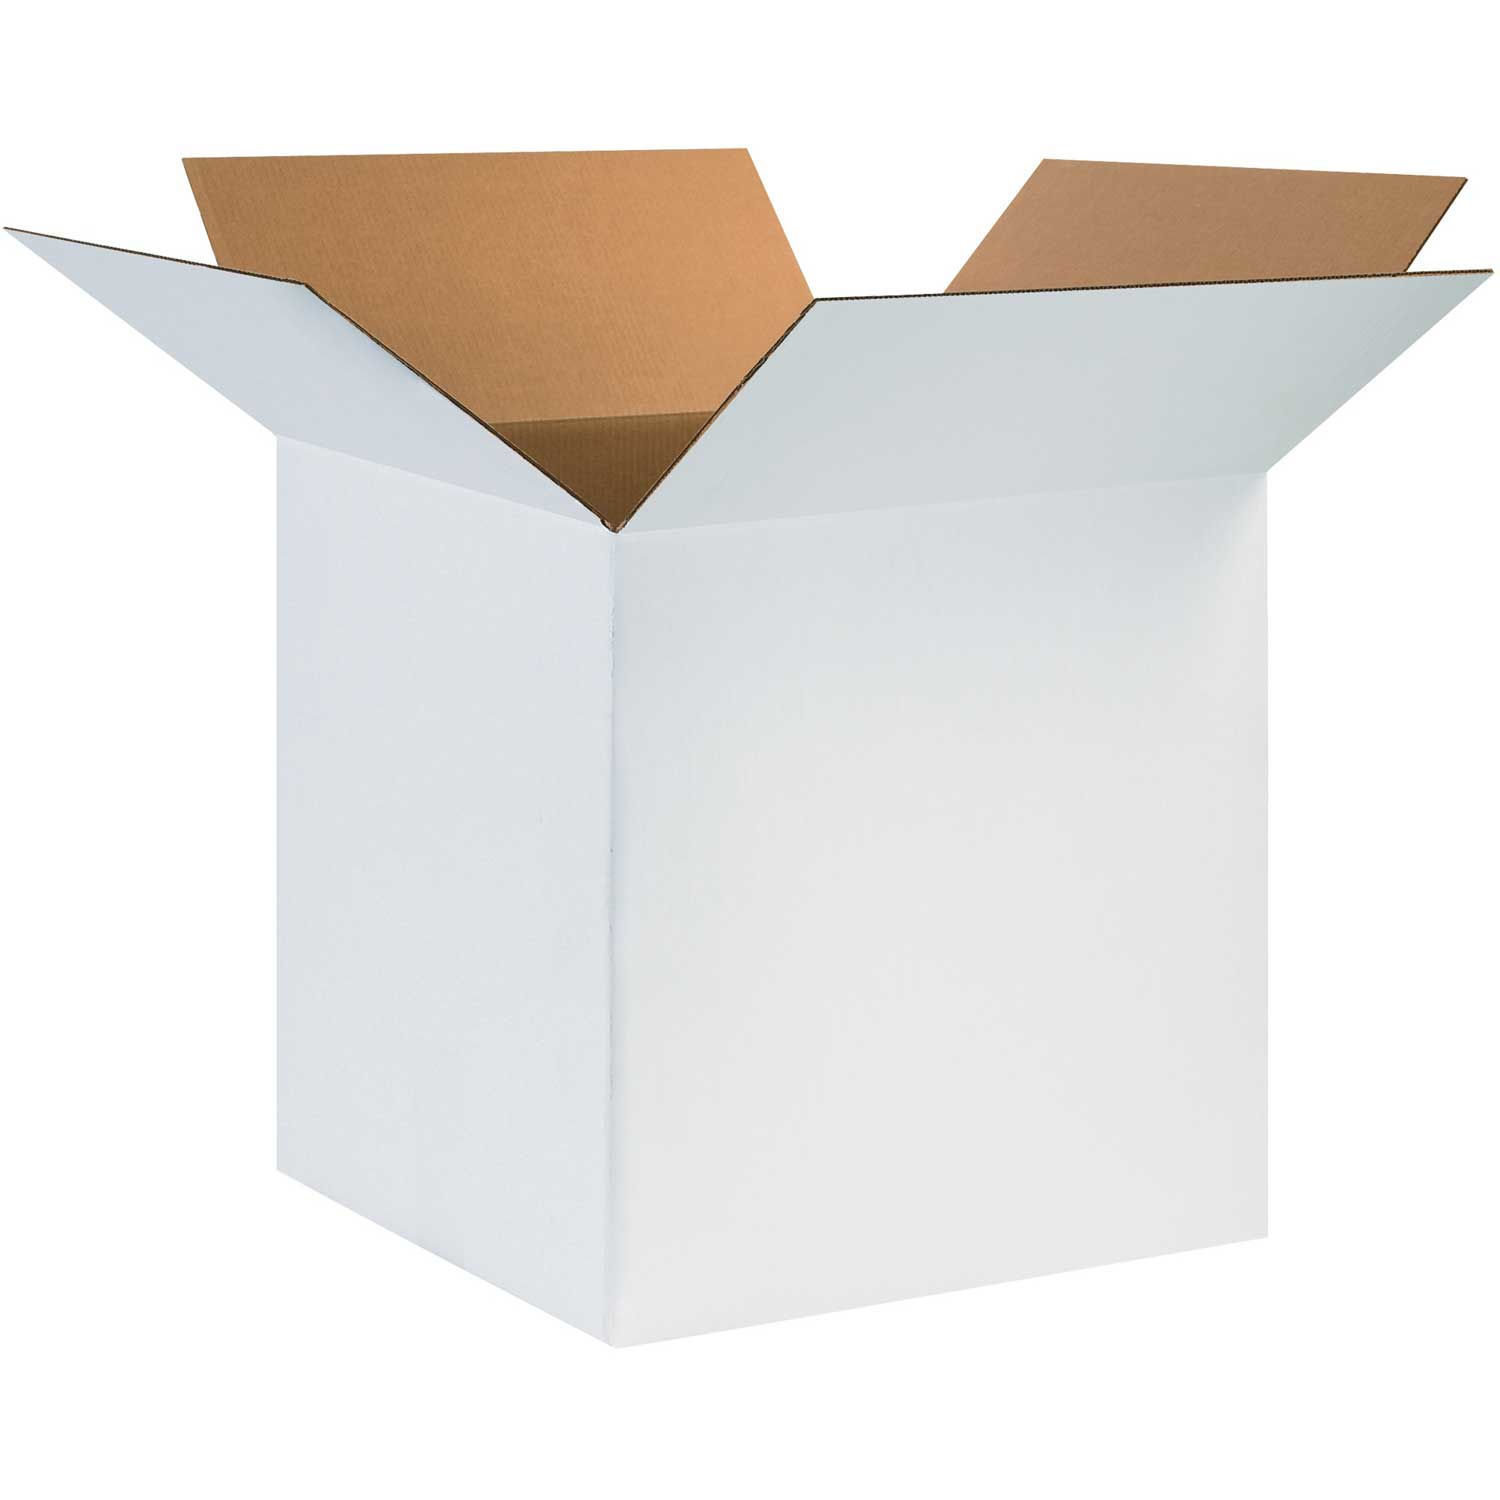 24"x24"x24" White Cardboard Corrugated Box, 200lb. Test/ECT-32, Lot of